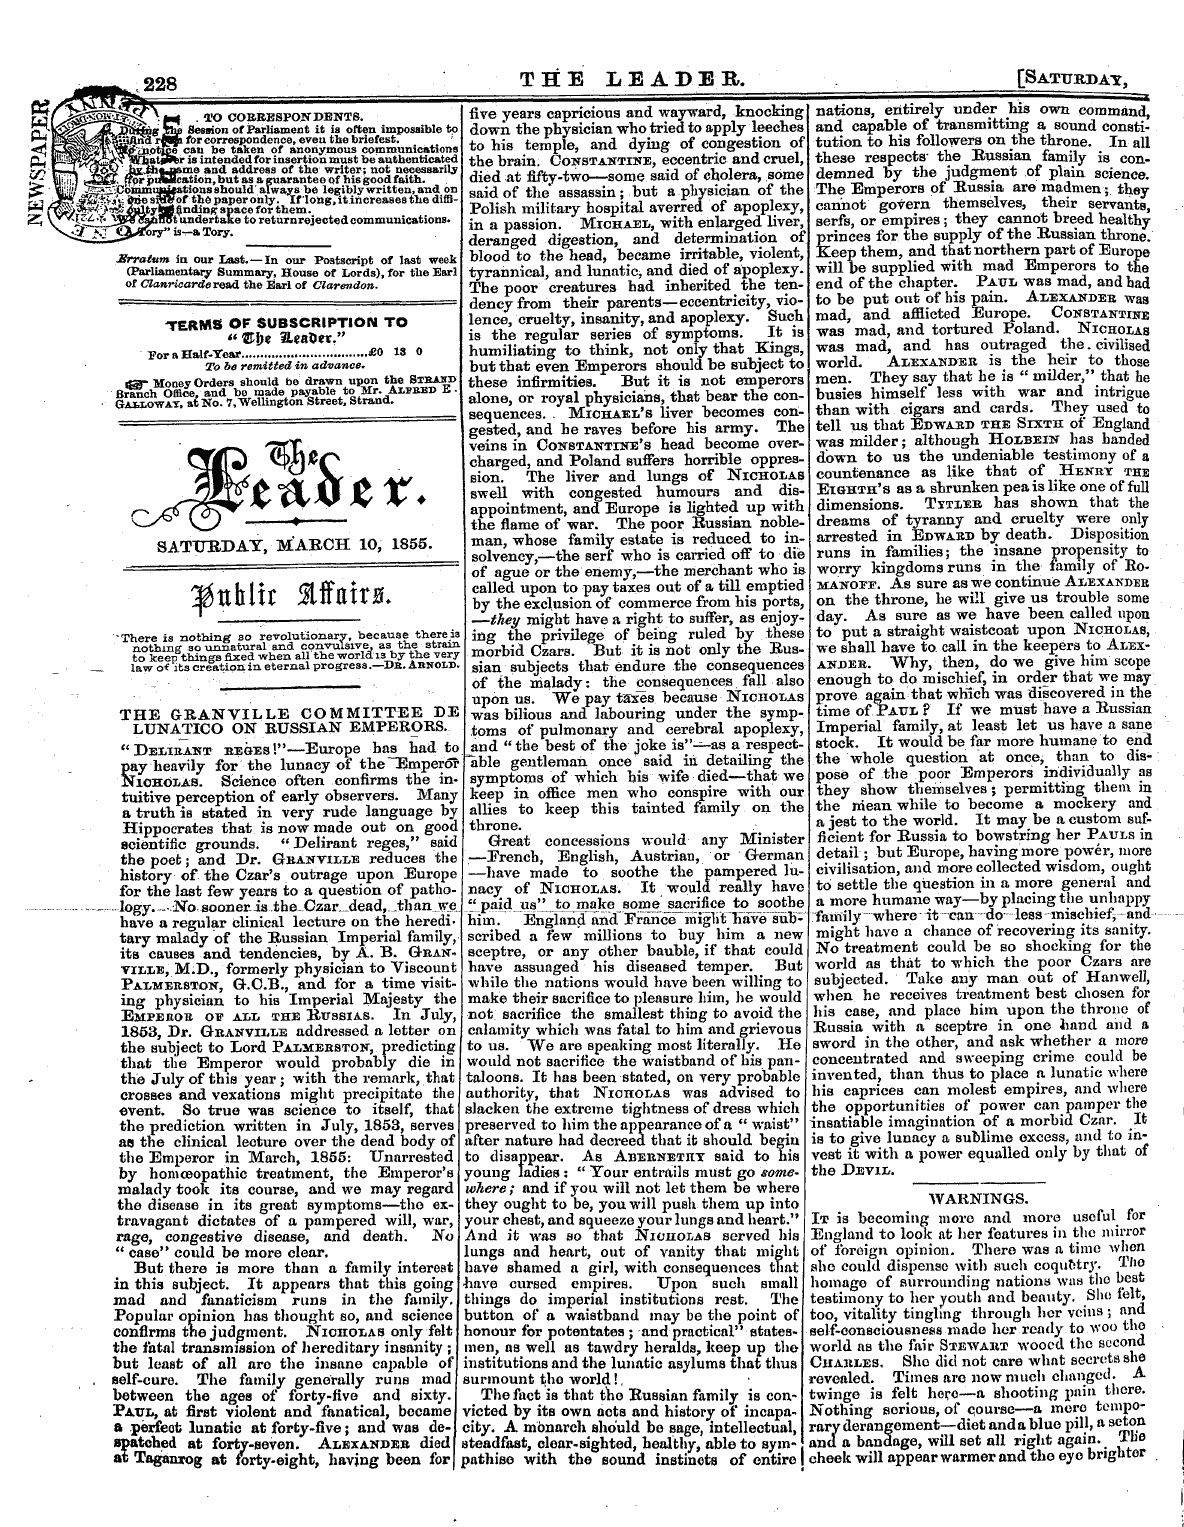 Leader (1850-1860): jS F Y, 2nd edition - Saturday, March 10, 1855.